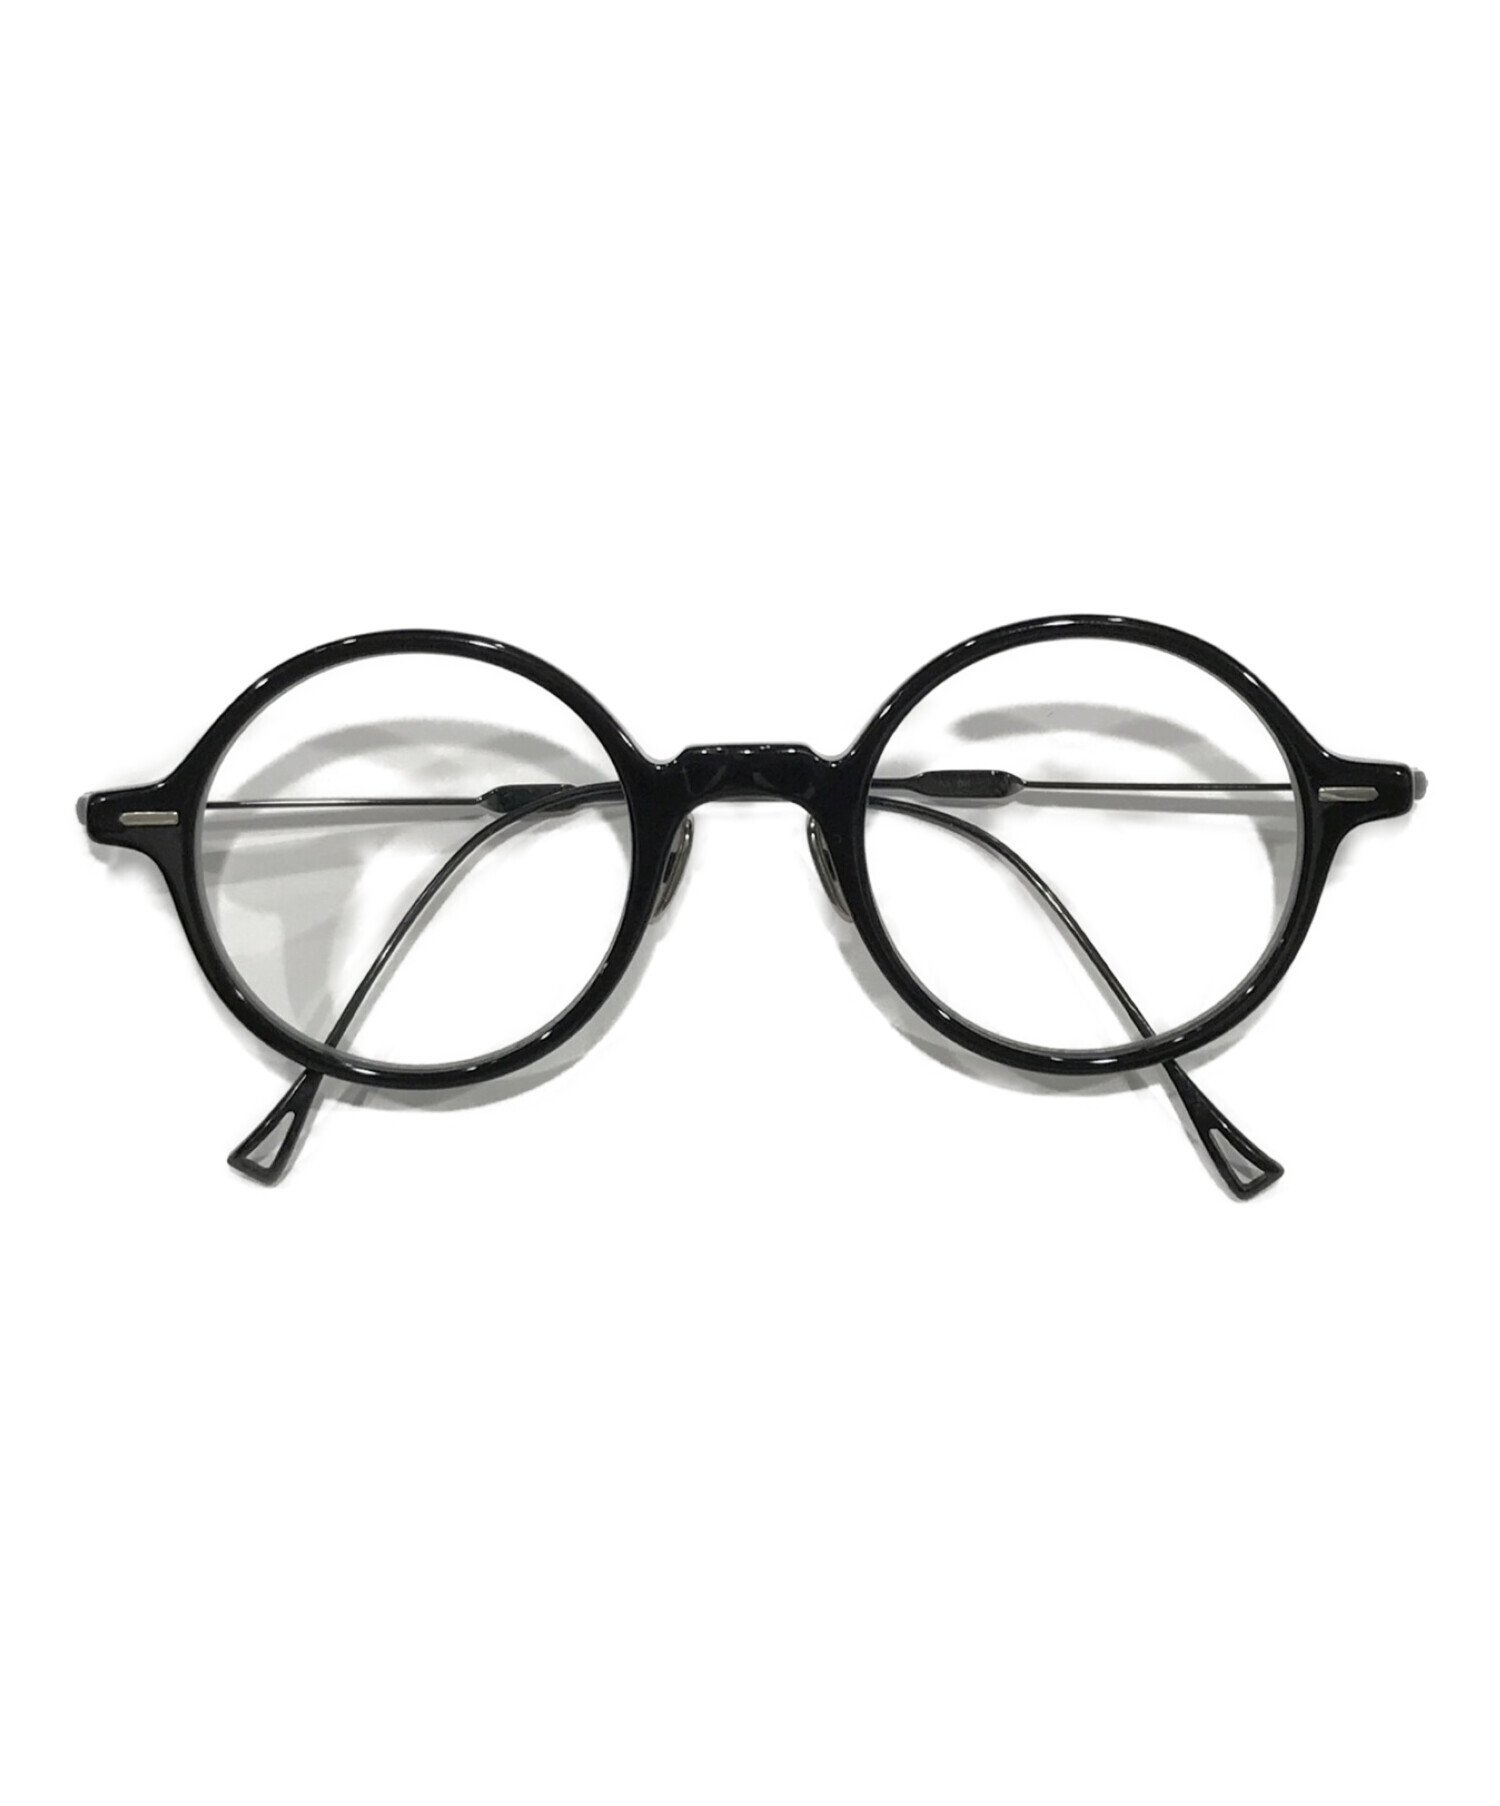 ISSEY MIYAKE×金子眼鏡 (イッセイミヤケ×カネコメガネ) 伊達眼鏡 ブラック サイズ:46□23